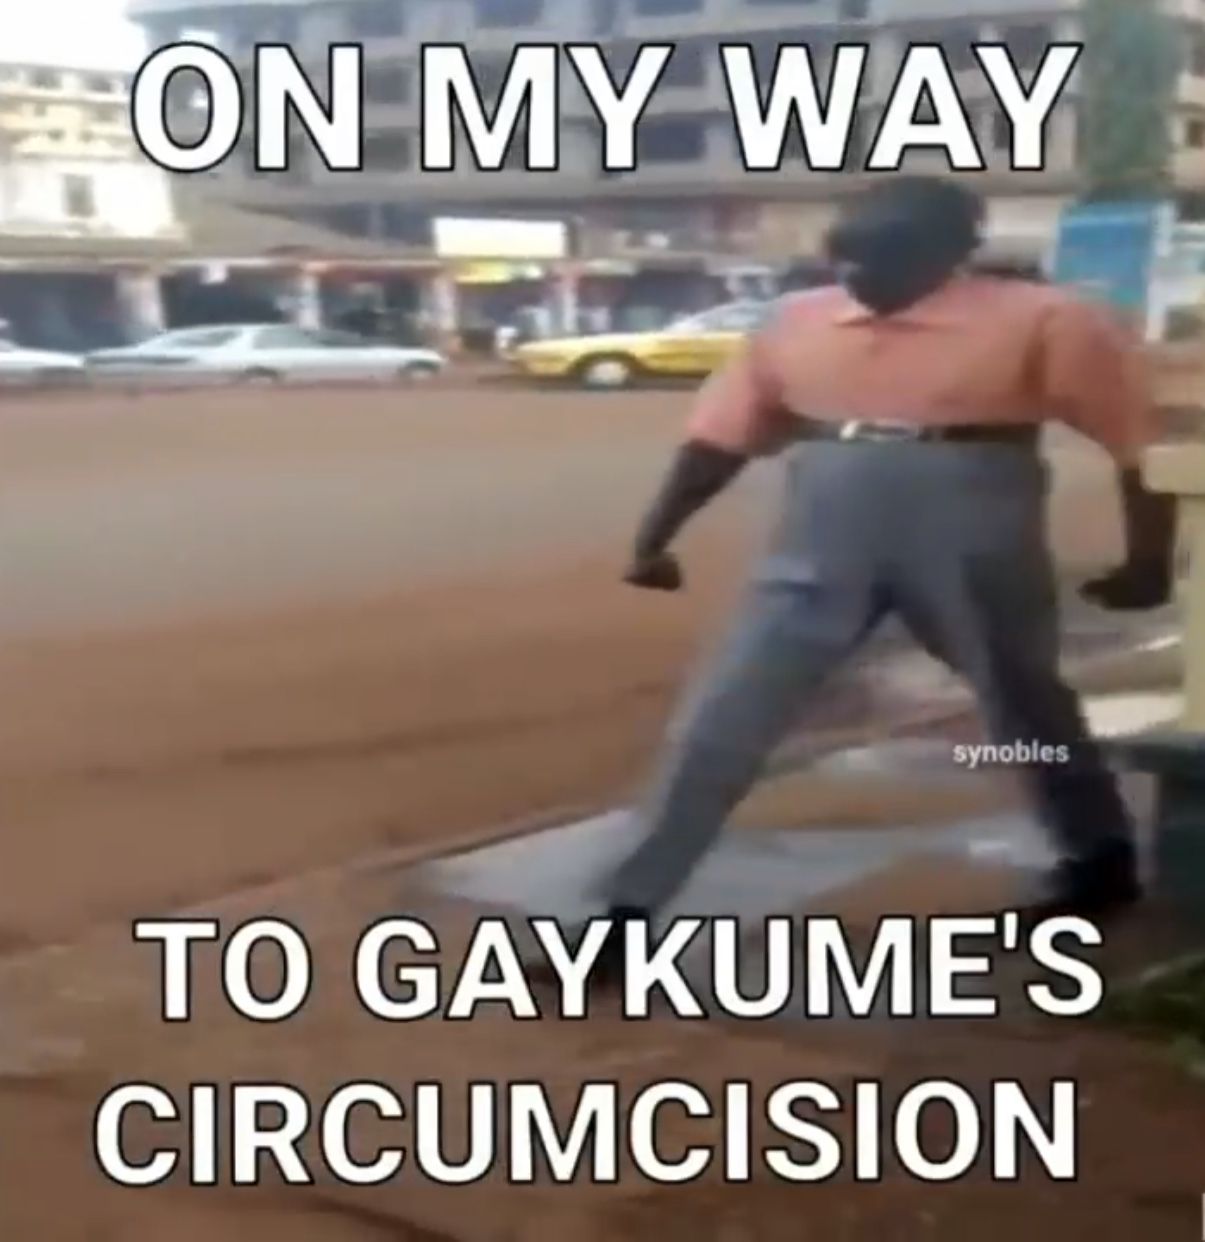 Gekyume Circumcision Date Wallpapers